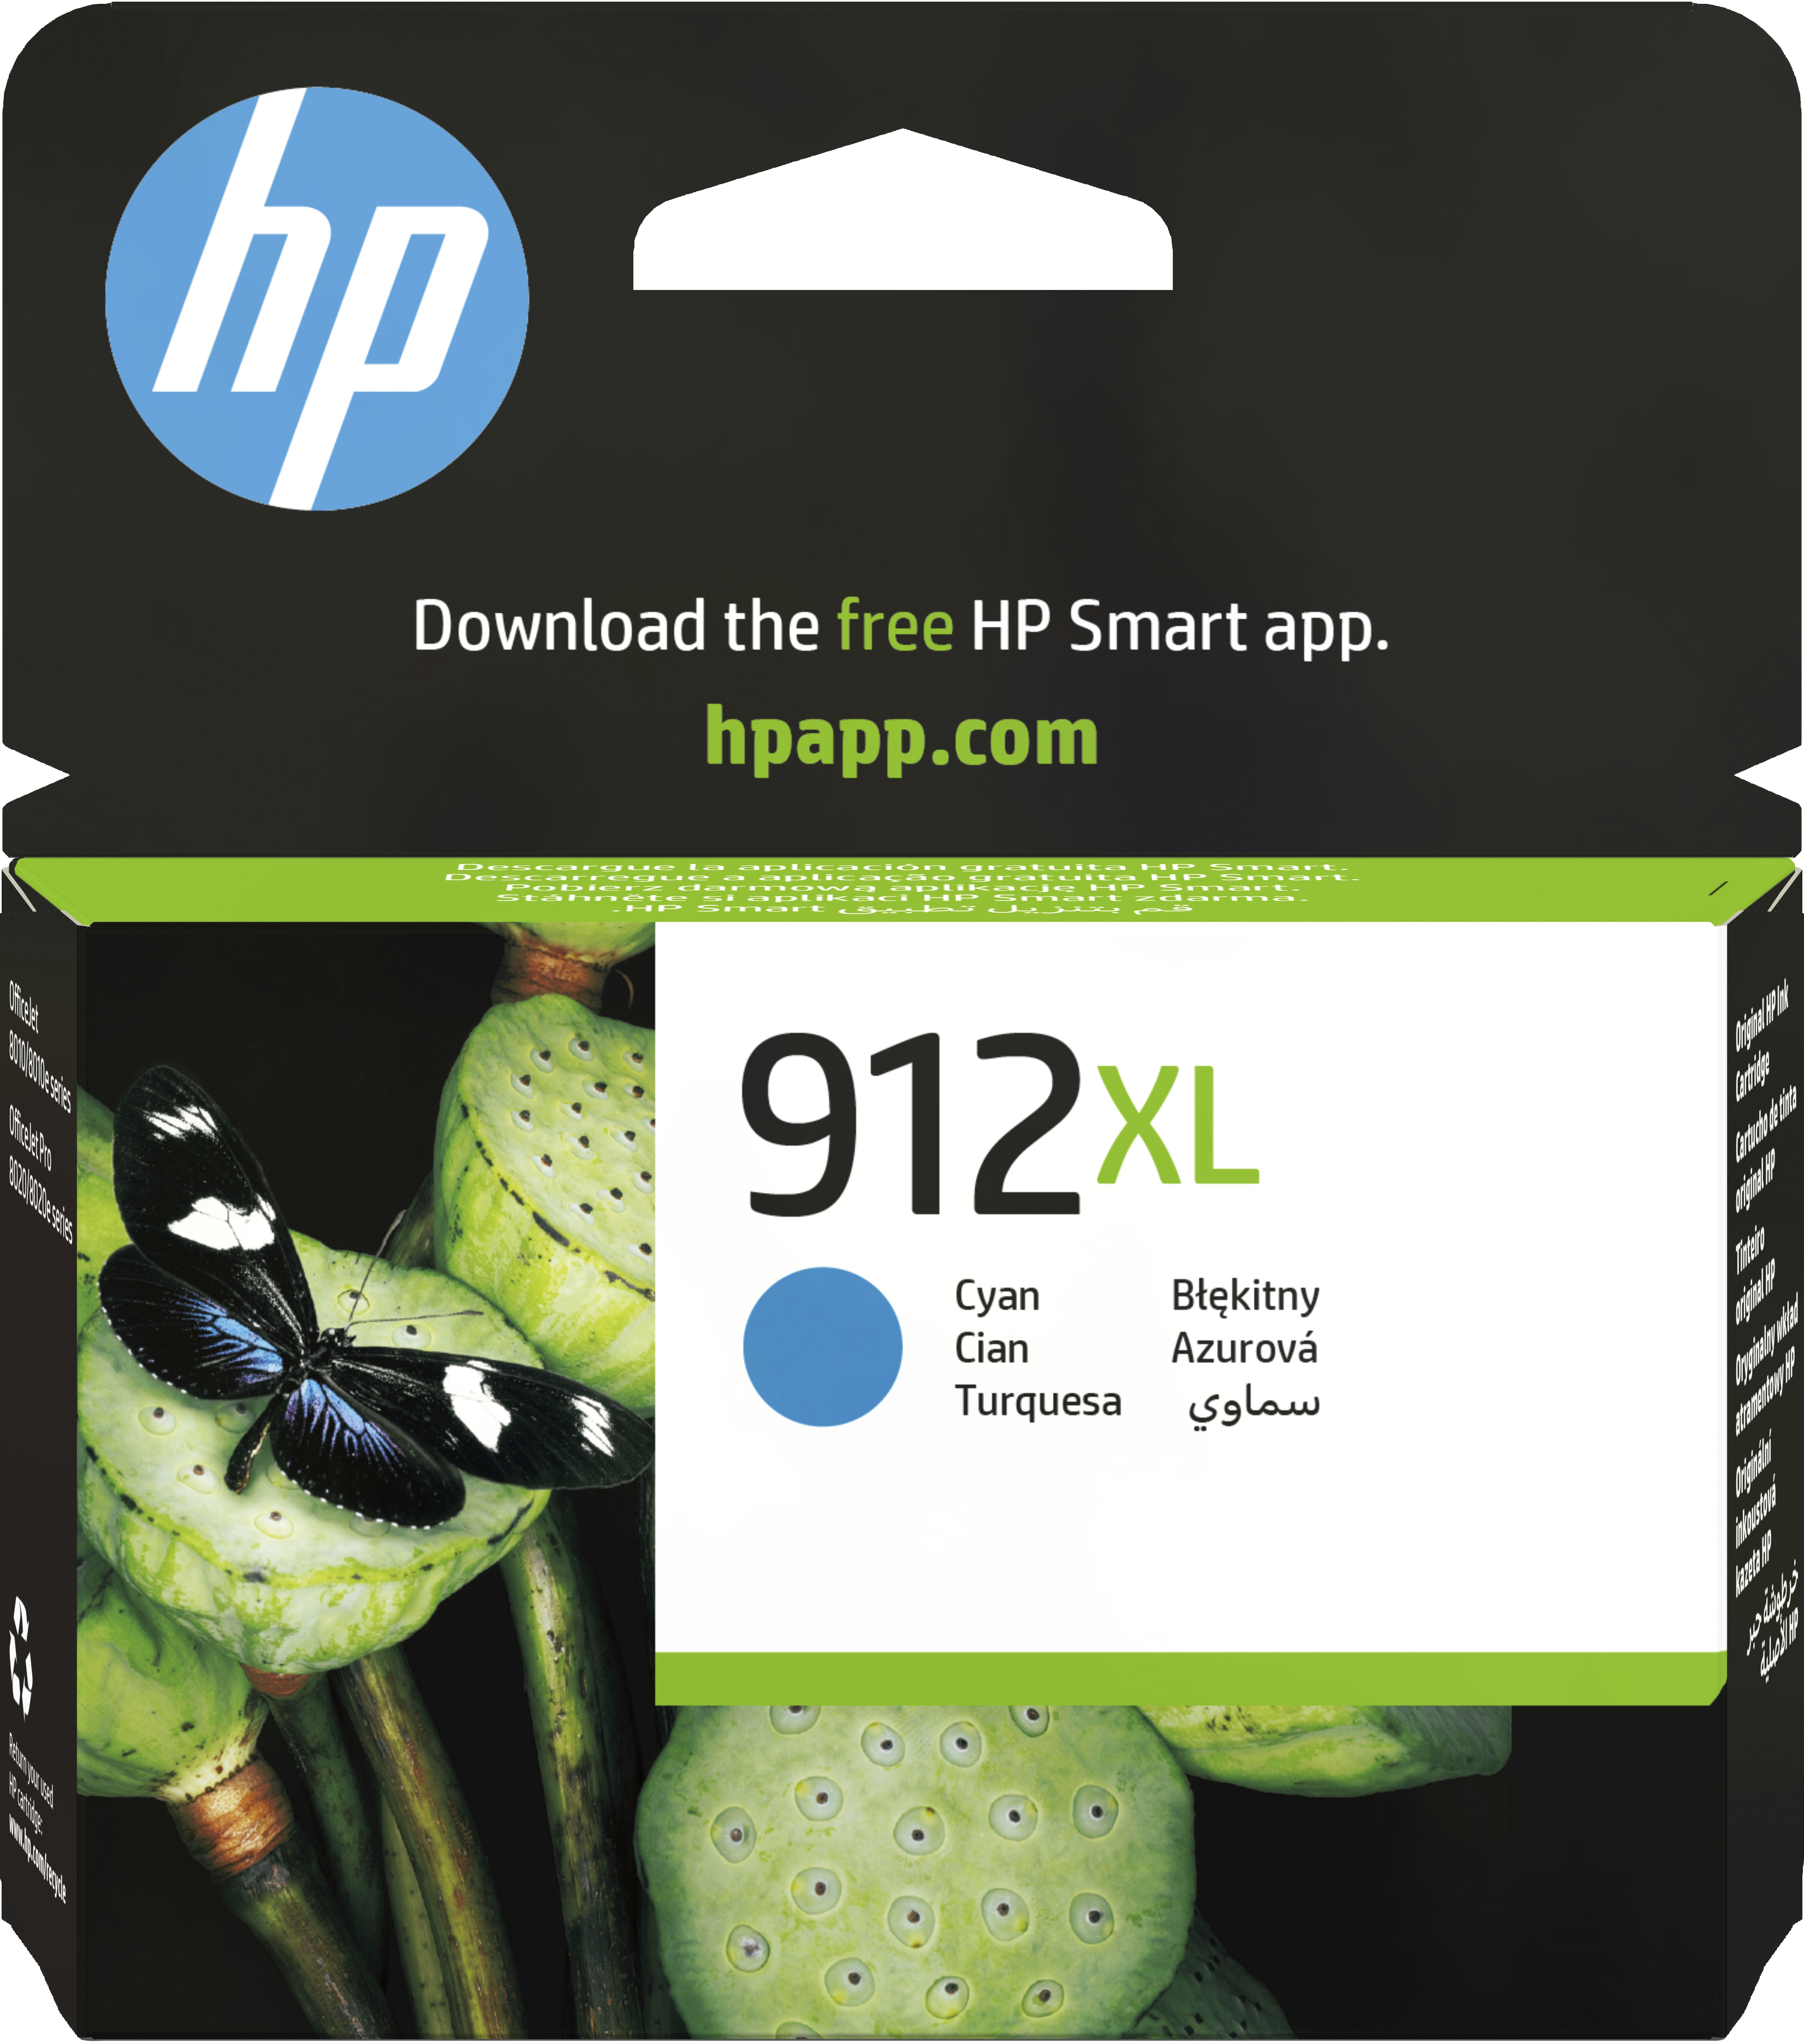 HP 912XL - 9.9 ml - Hohe Ergiebigkeit - Cyan